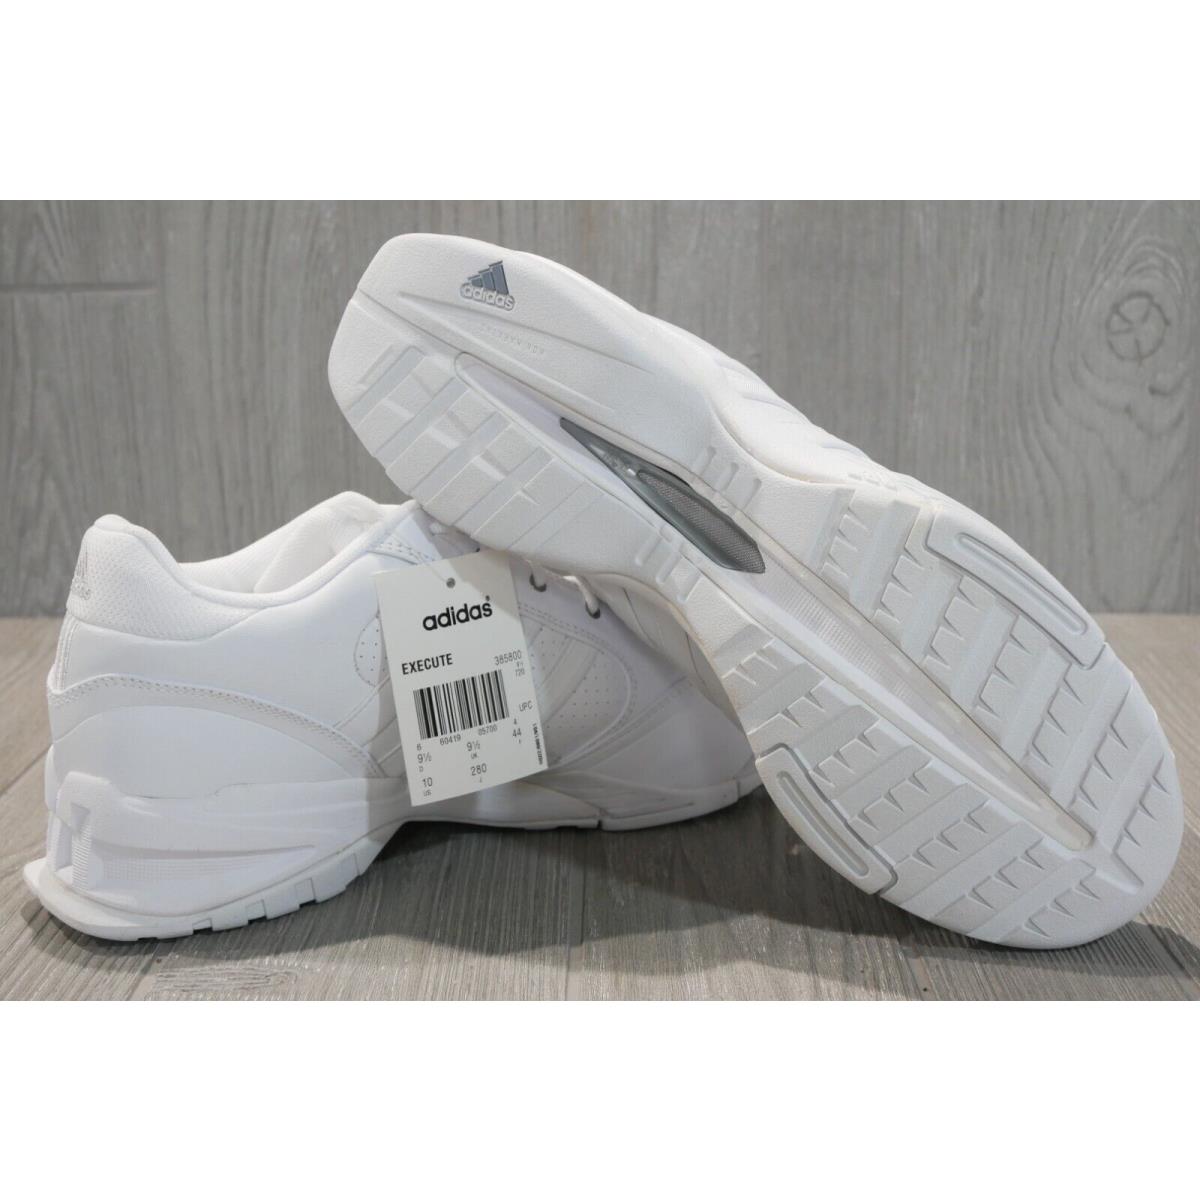 Adidas shoes Vintage - White 4